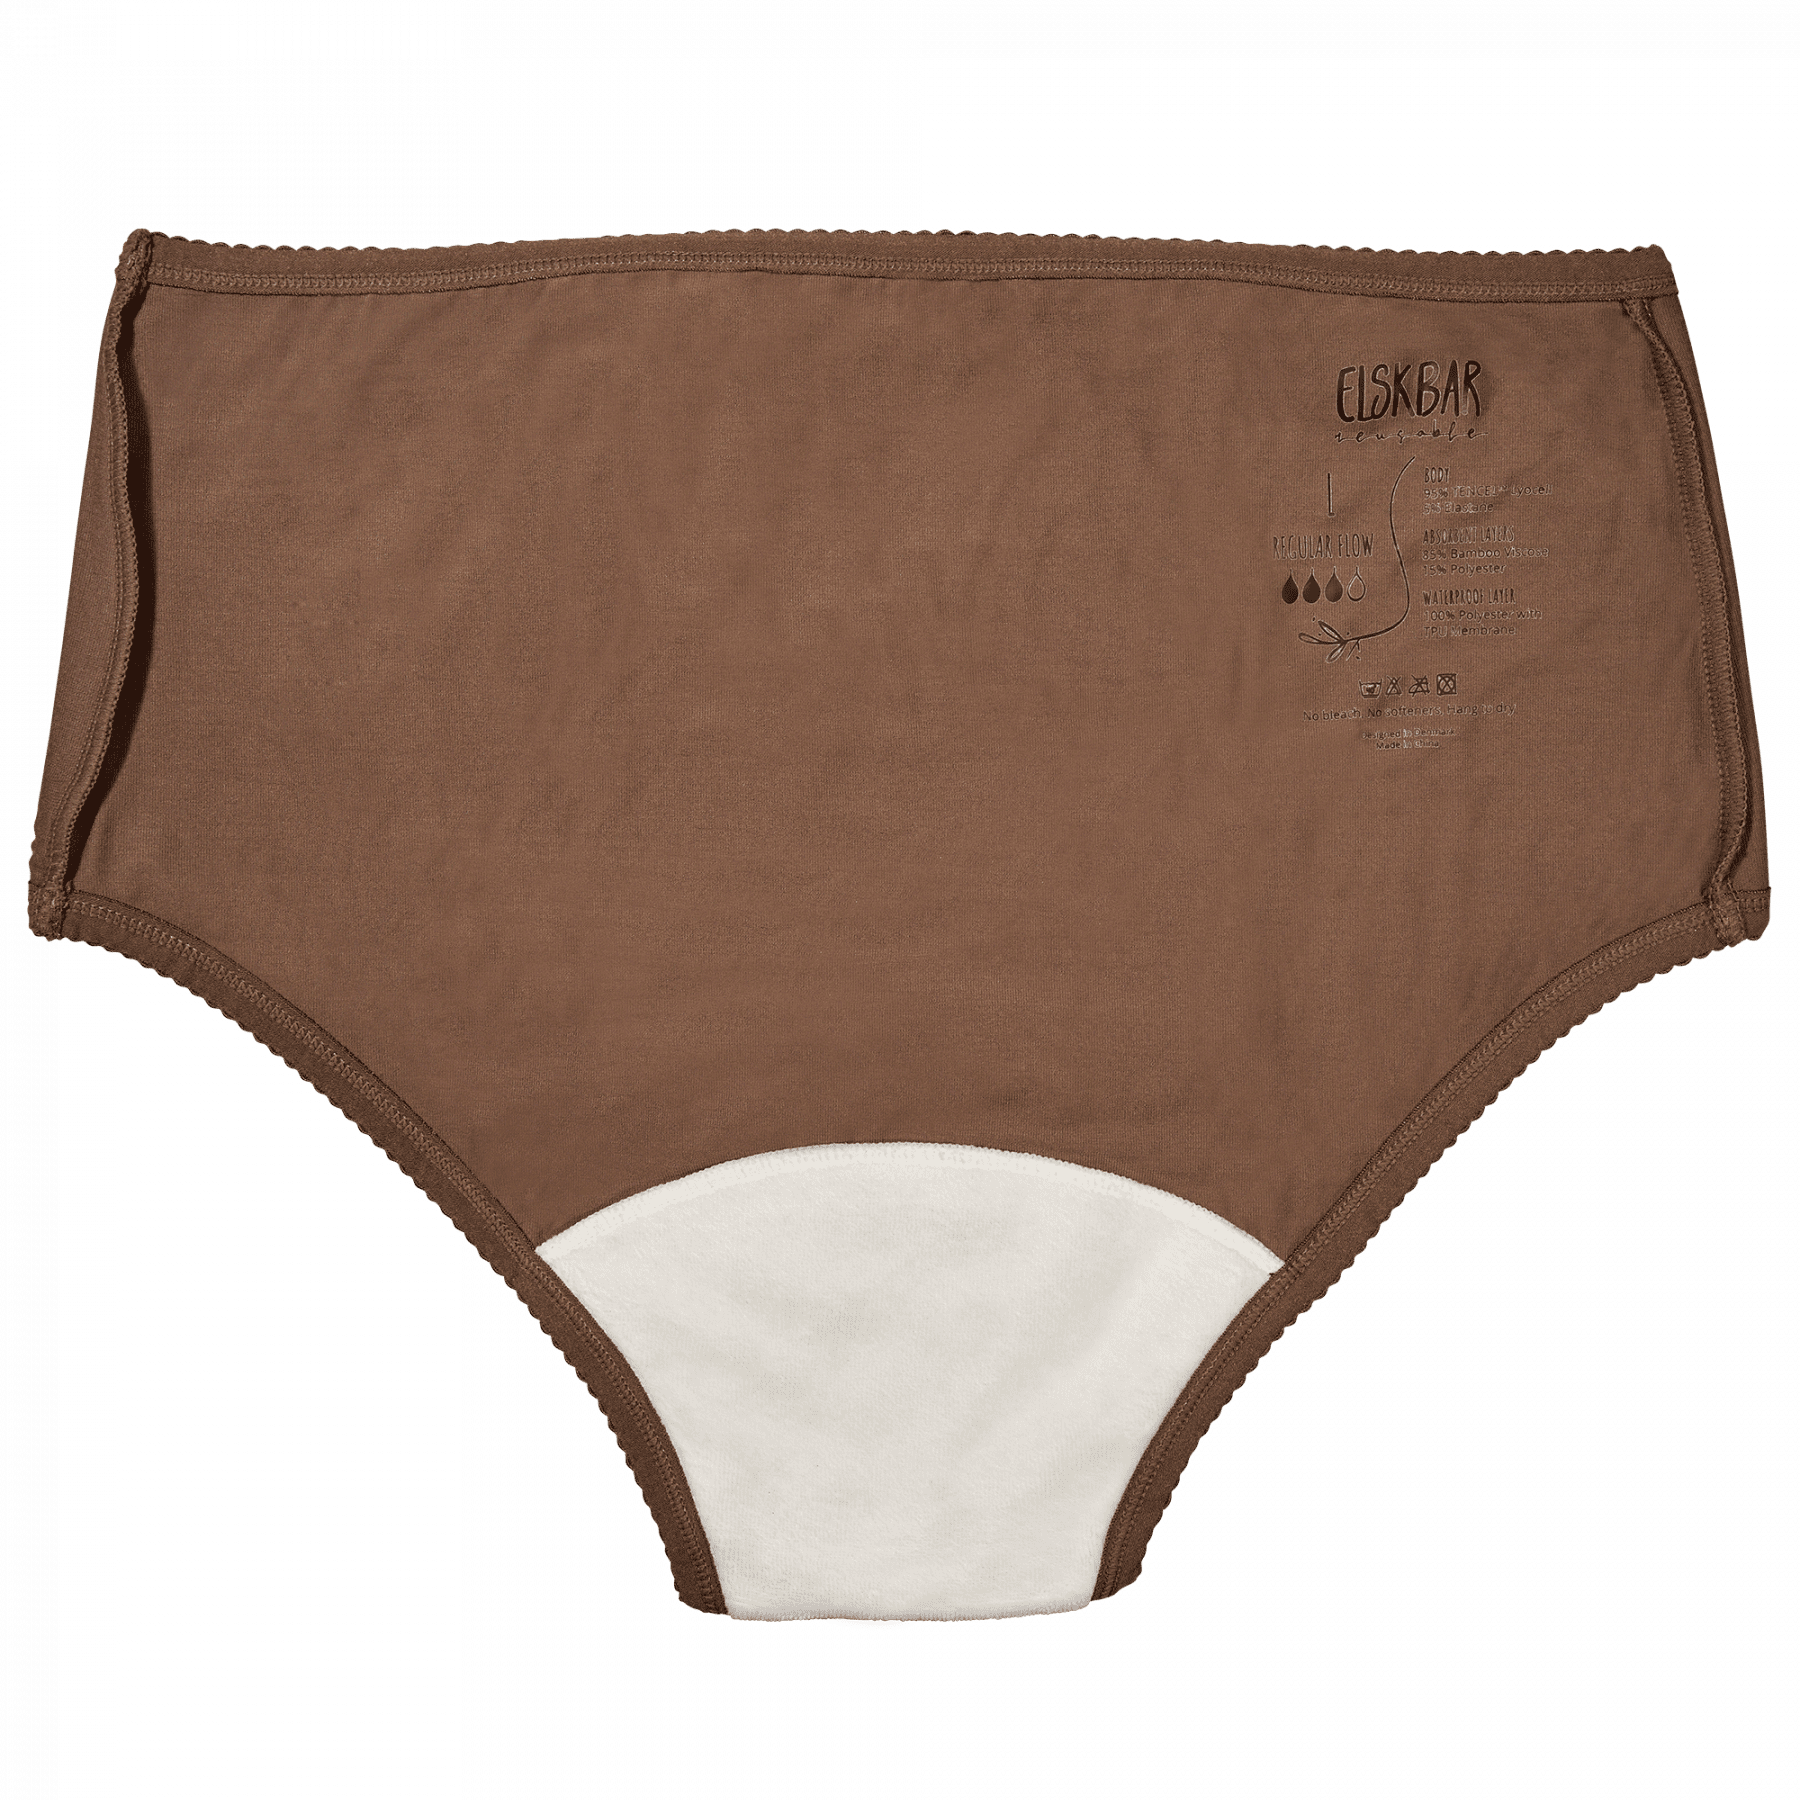 Period Underwear - Regular Flow Cedar - inside back